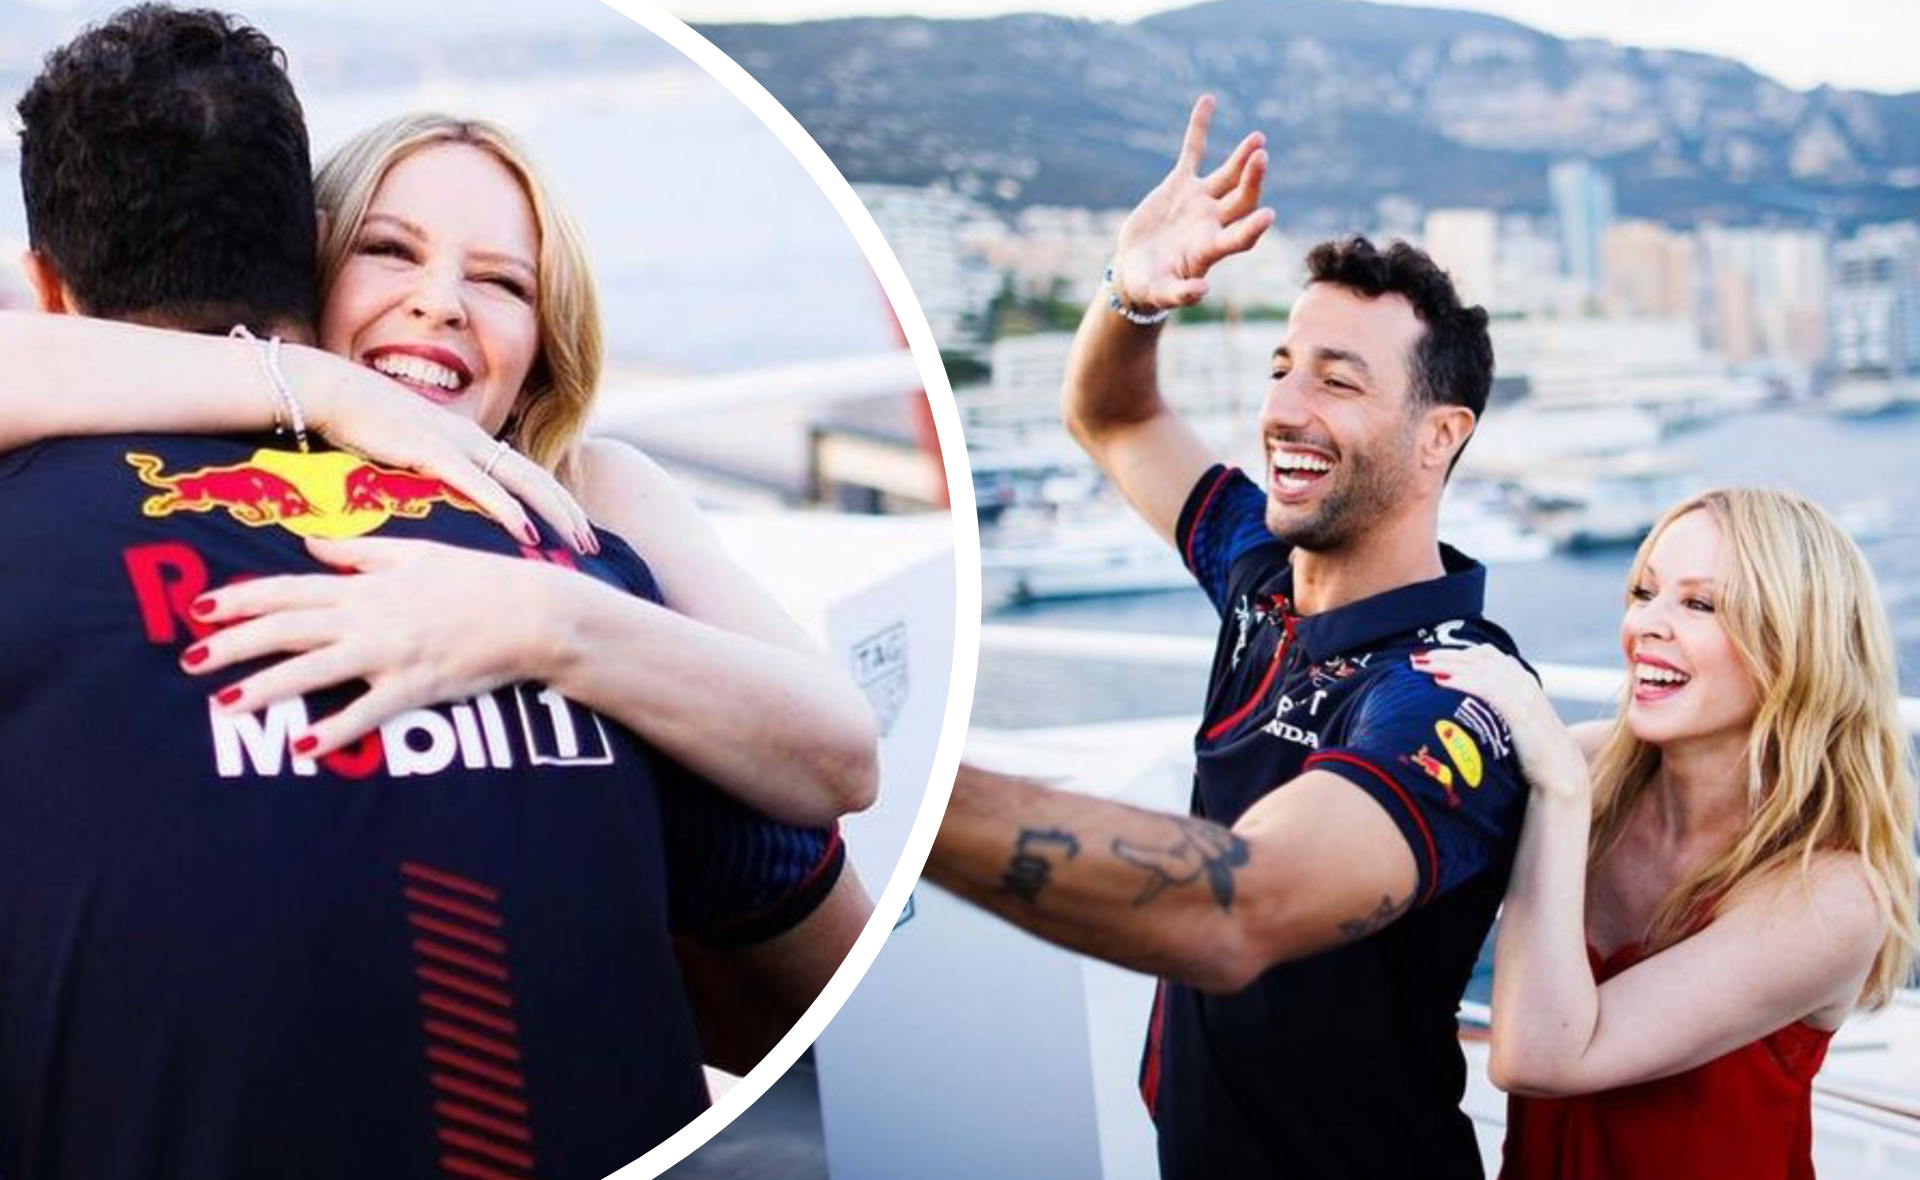 Inside Aussie superstars Daniel Ricciardo and Kylie Minogue’s fun-filled day in Monaco